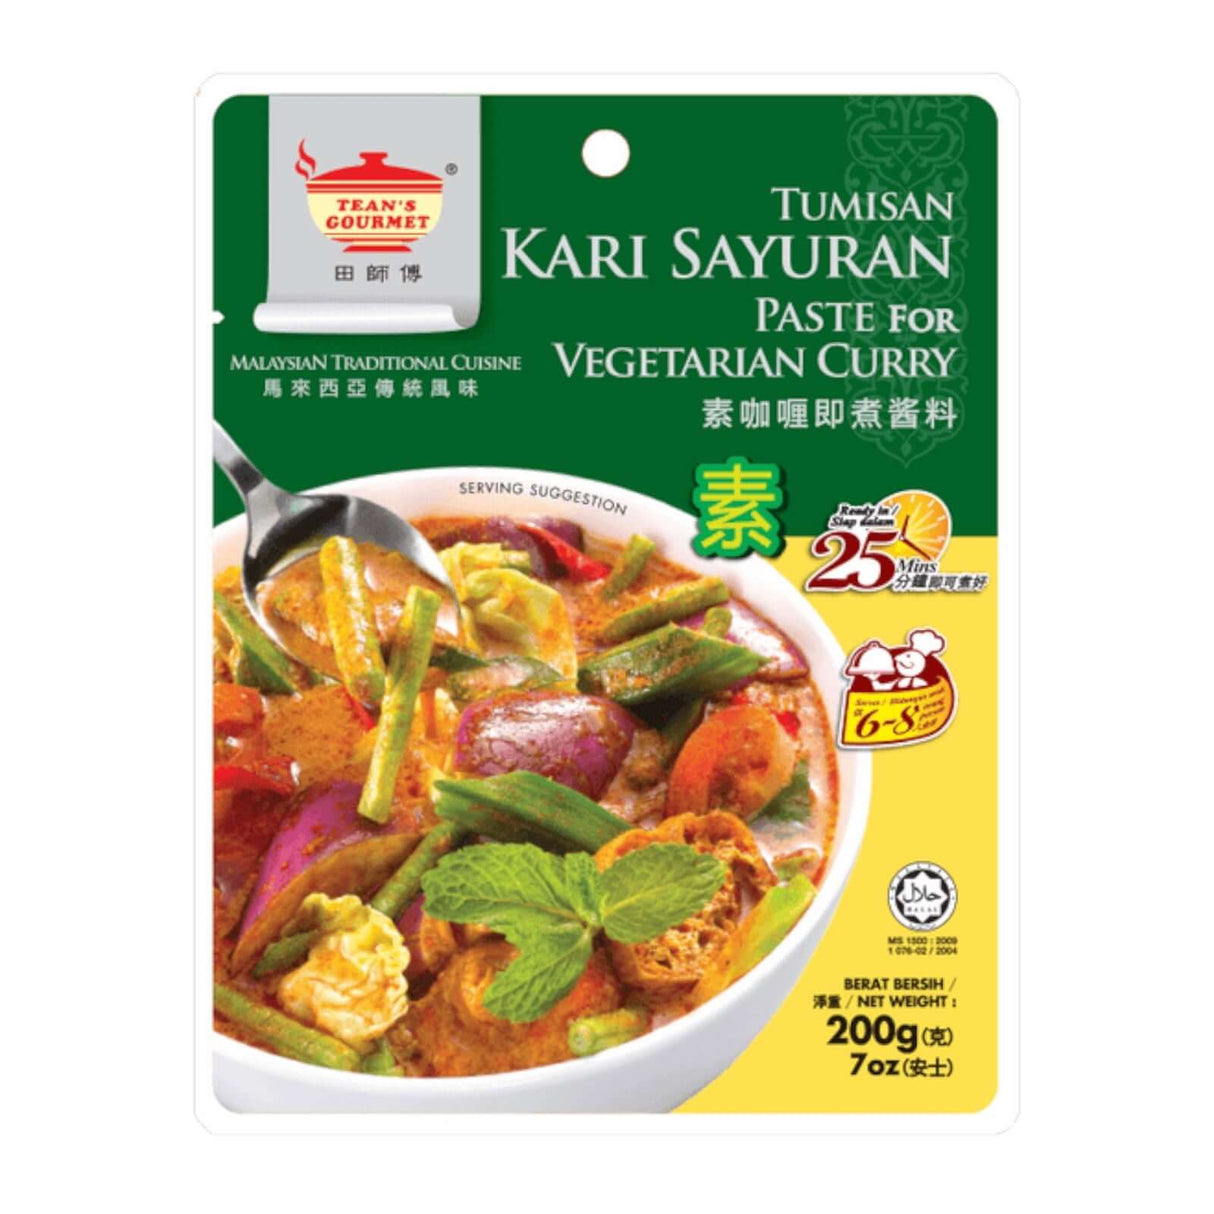 Tean's Gourmet Tumisan Kari Sayuran Paste for Vegetarian Curry